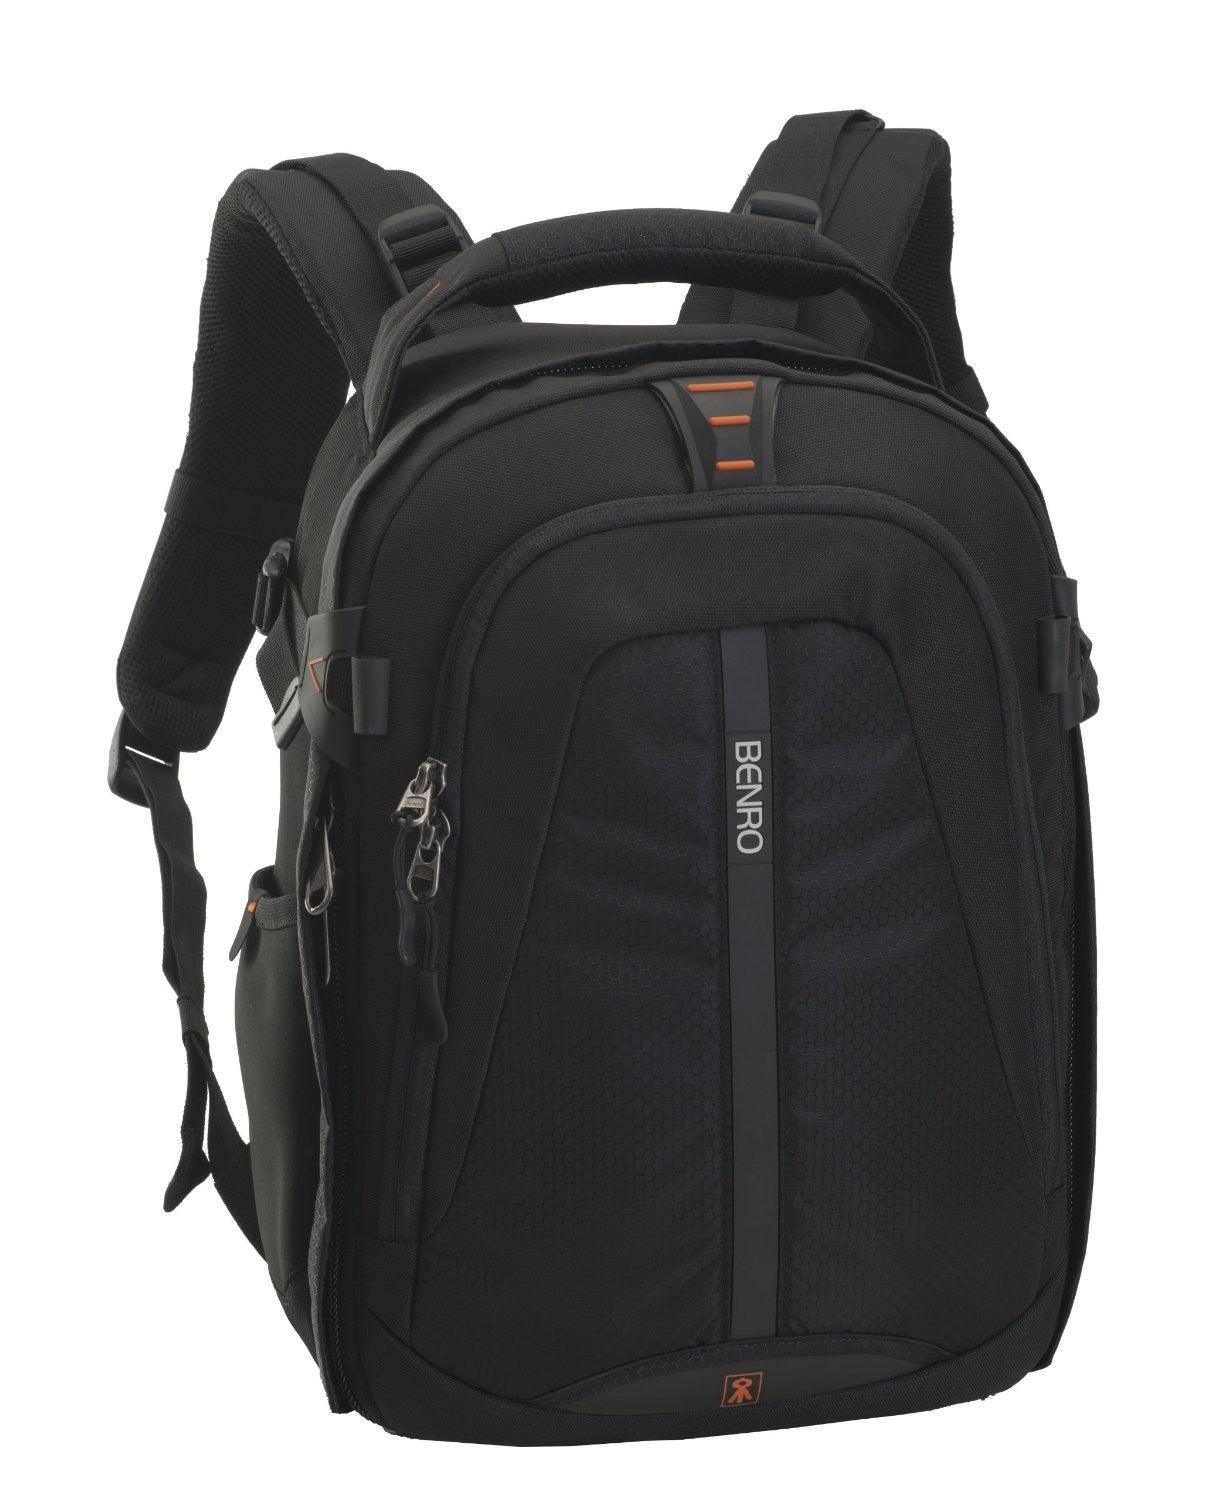 Benro Backpack schwarz CW250